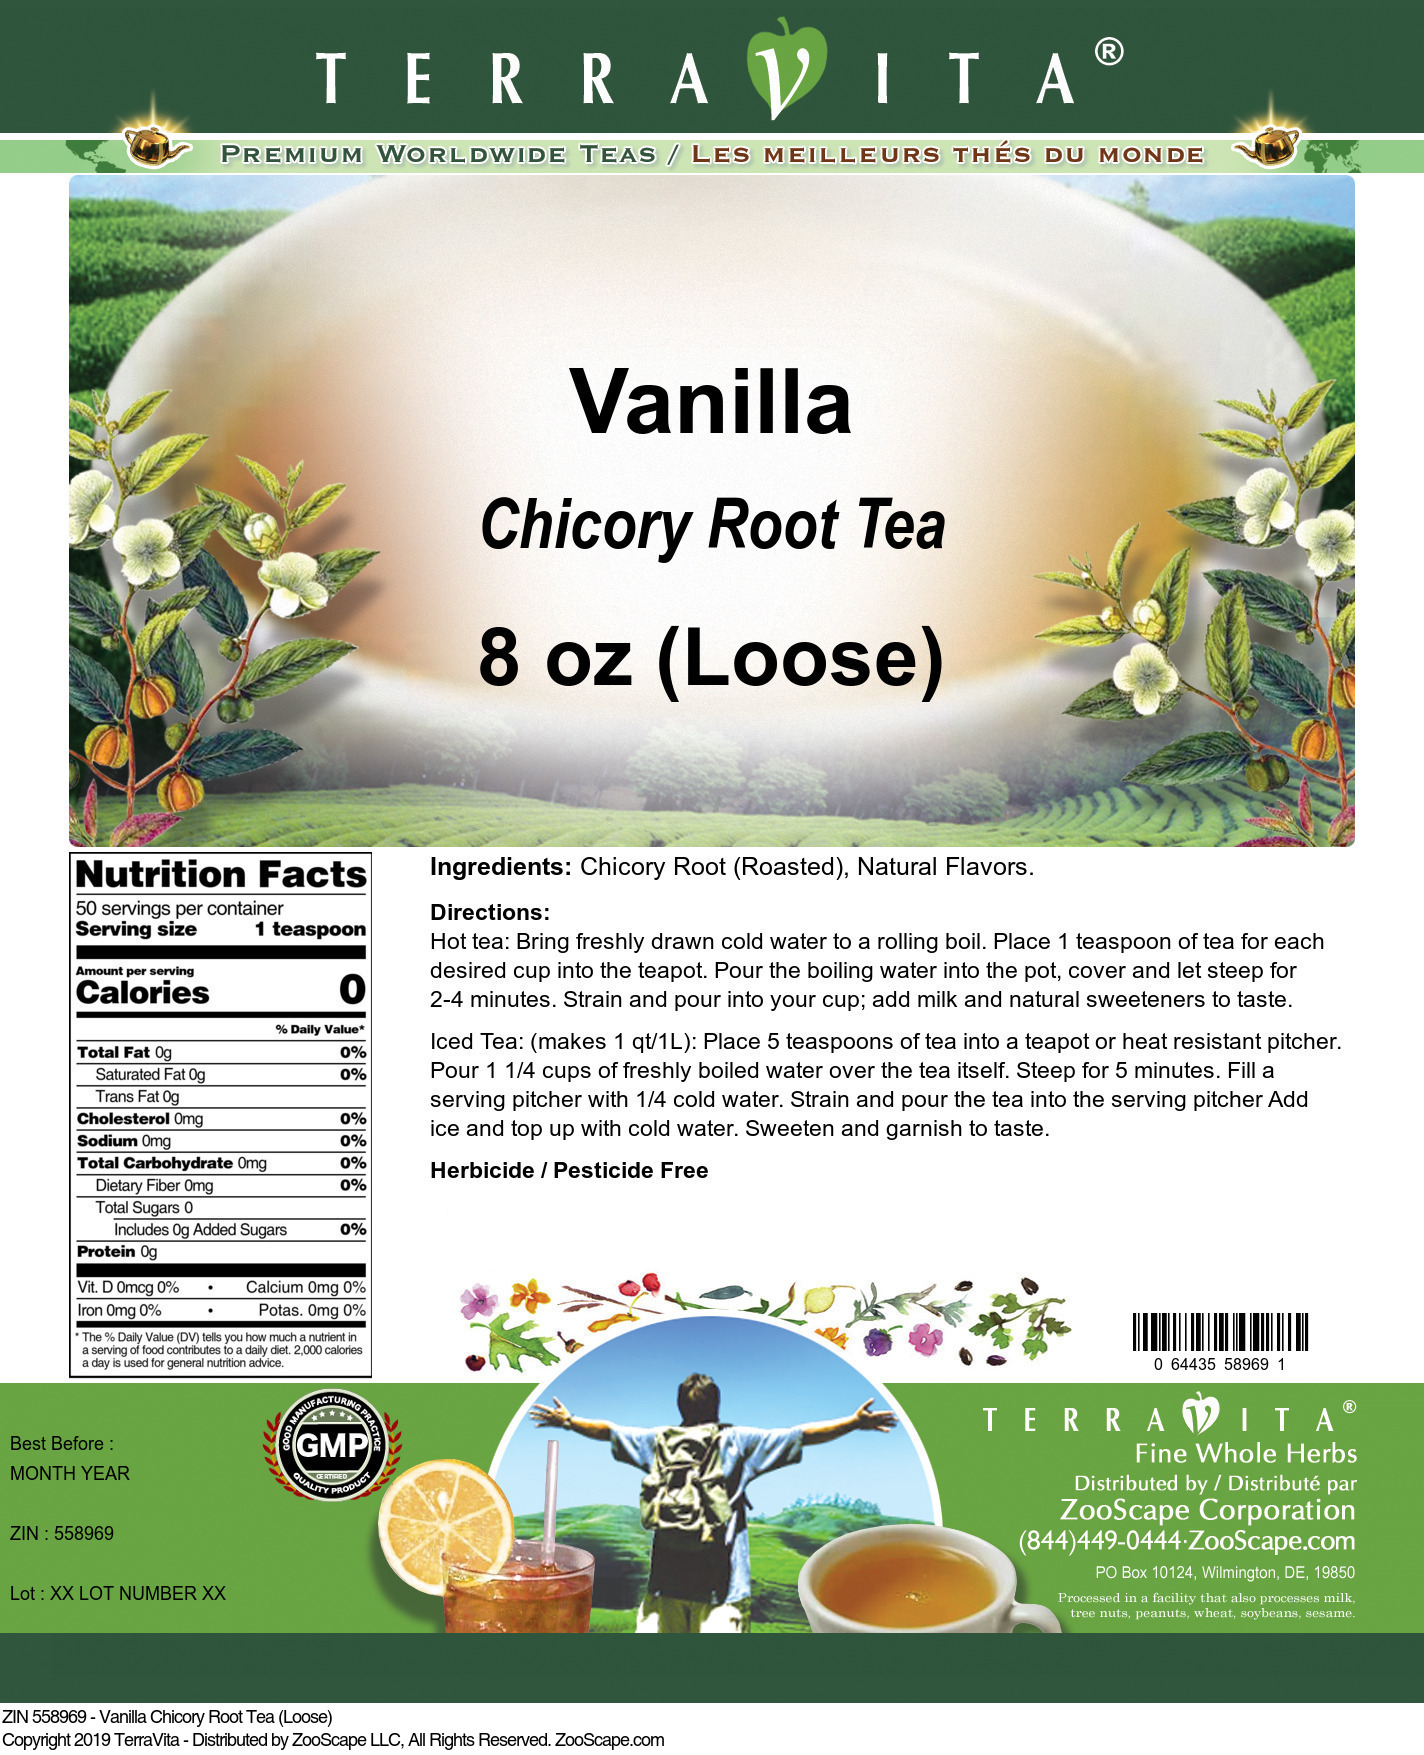 Vanilla Chicory Root Tea (Loose) - Label